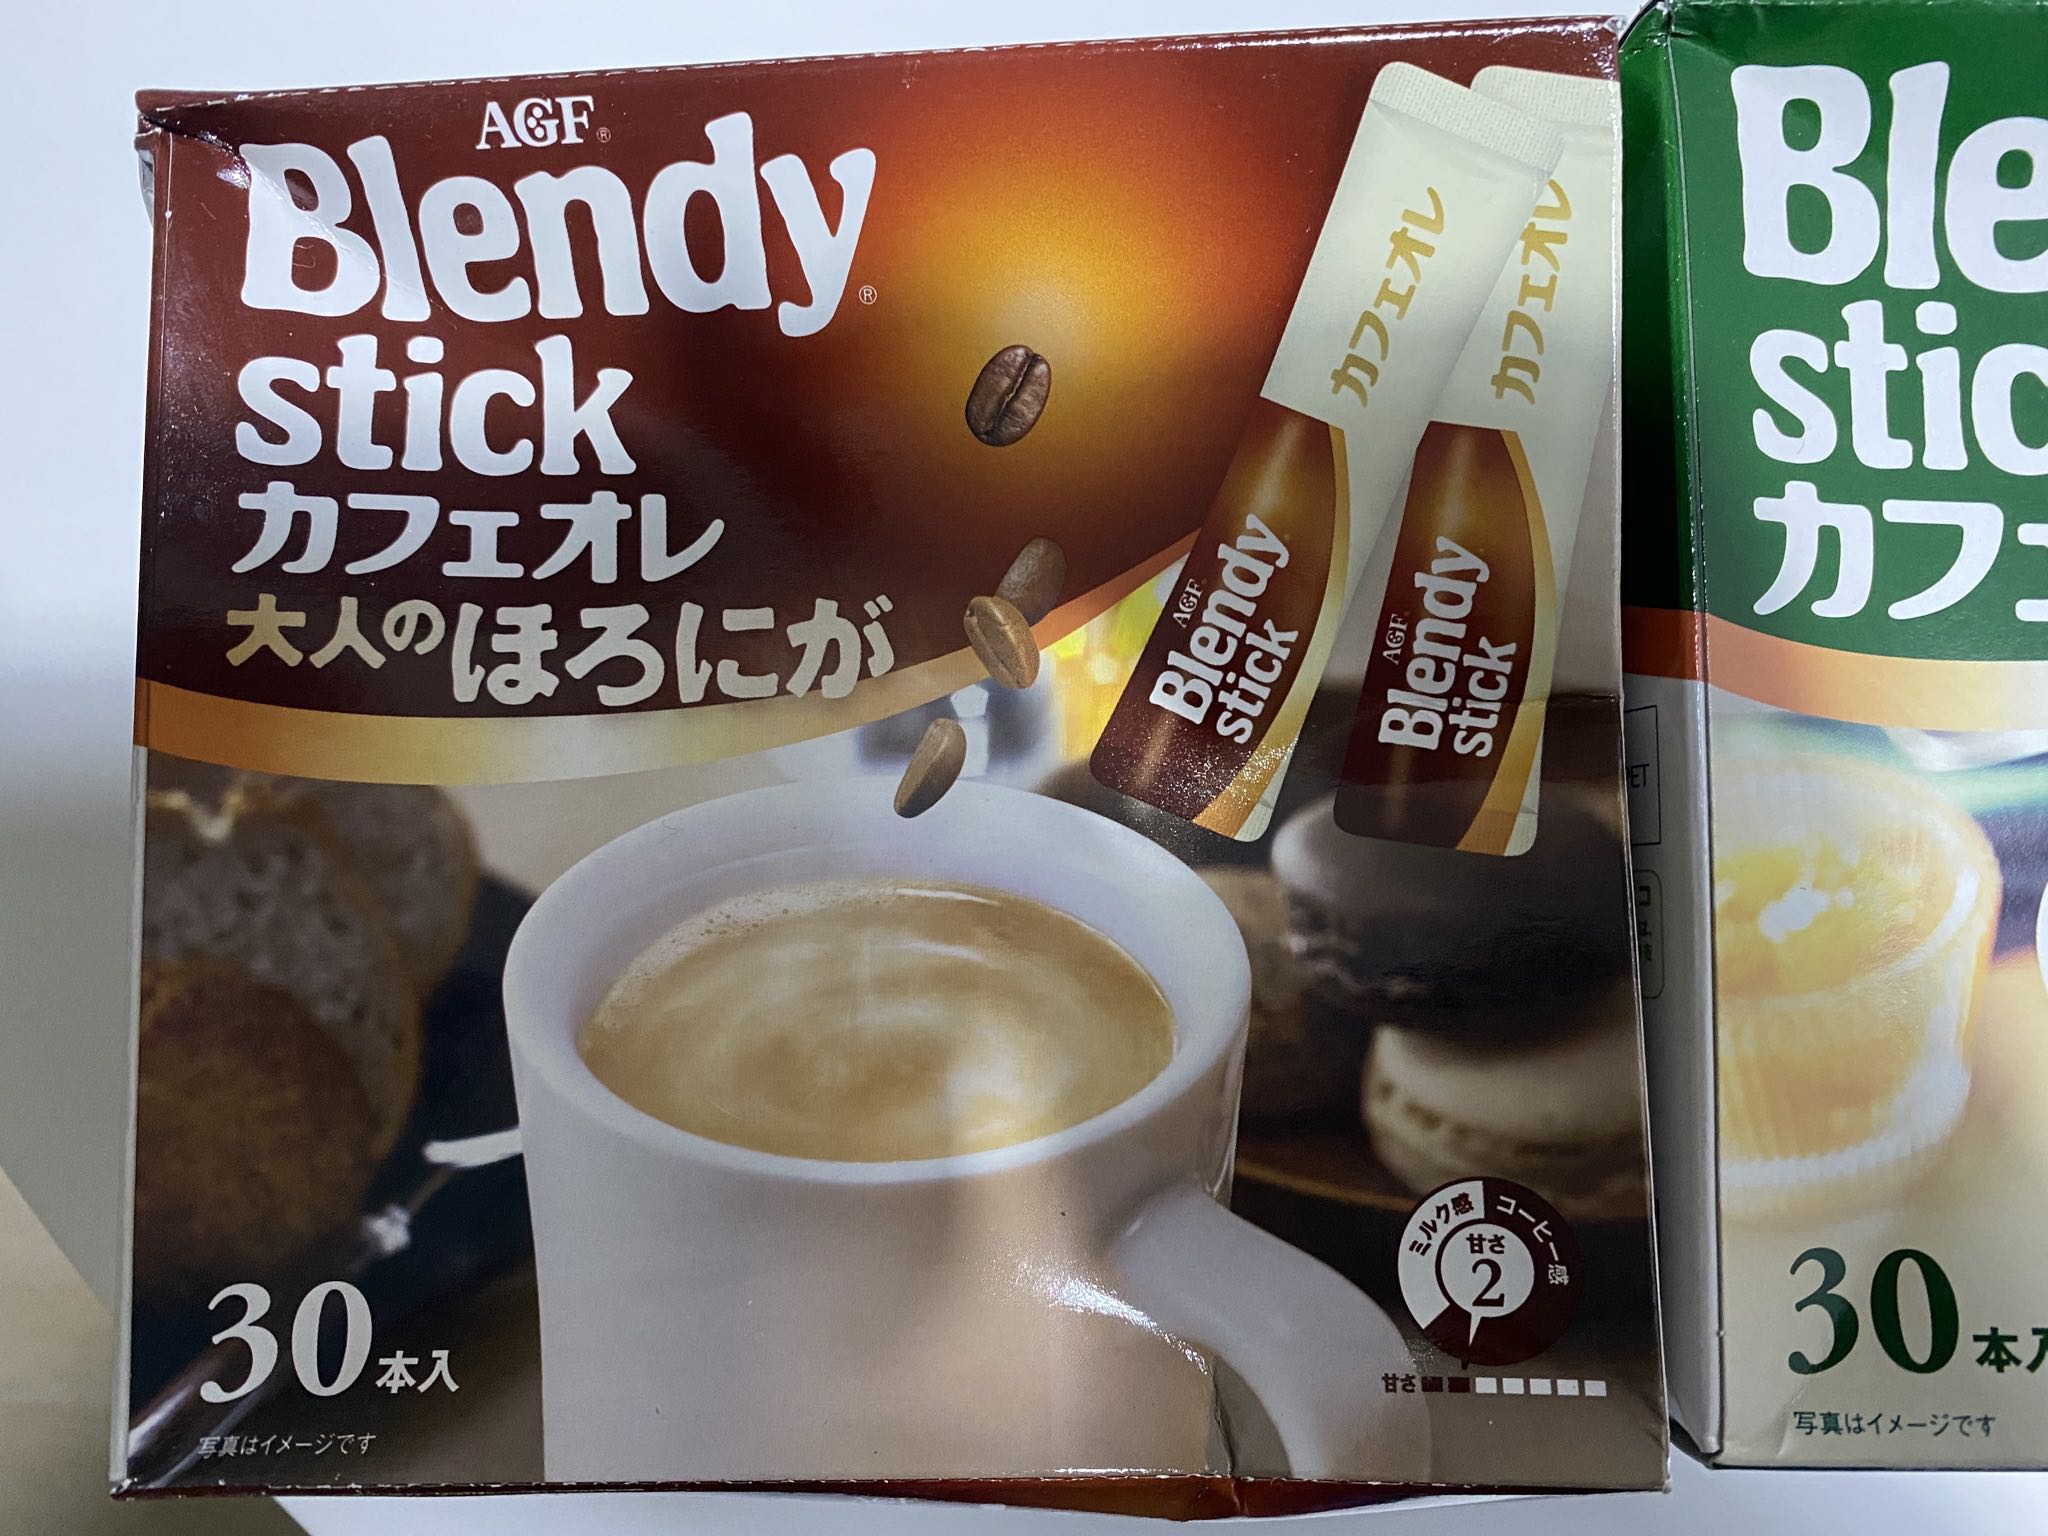 AGF Blendy Stick Cafe Au Lait Adult Bittersweet 27 sticks